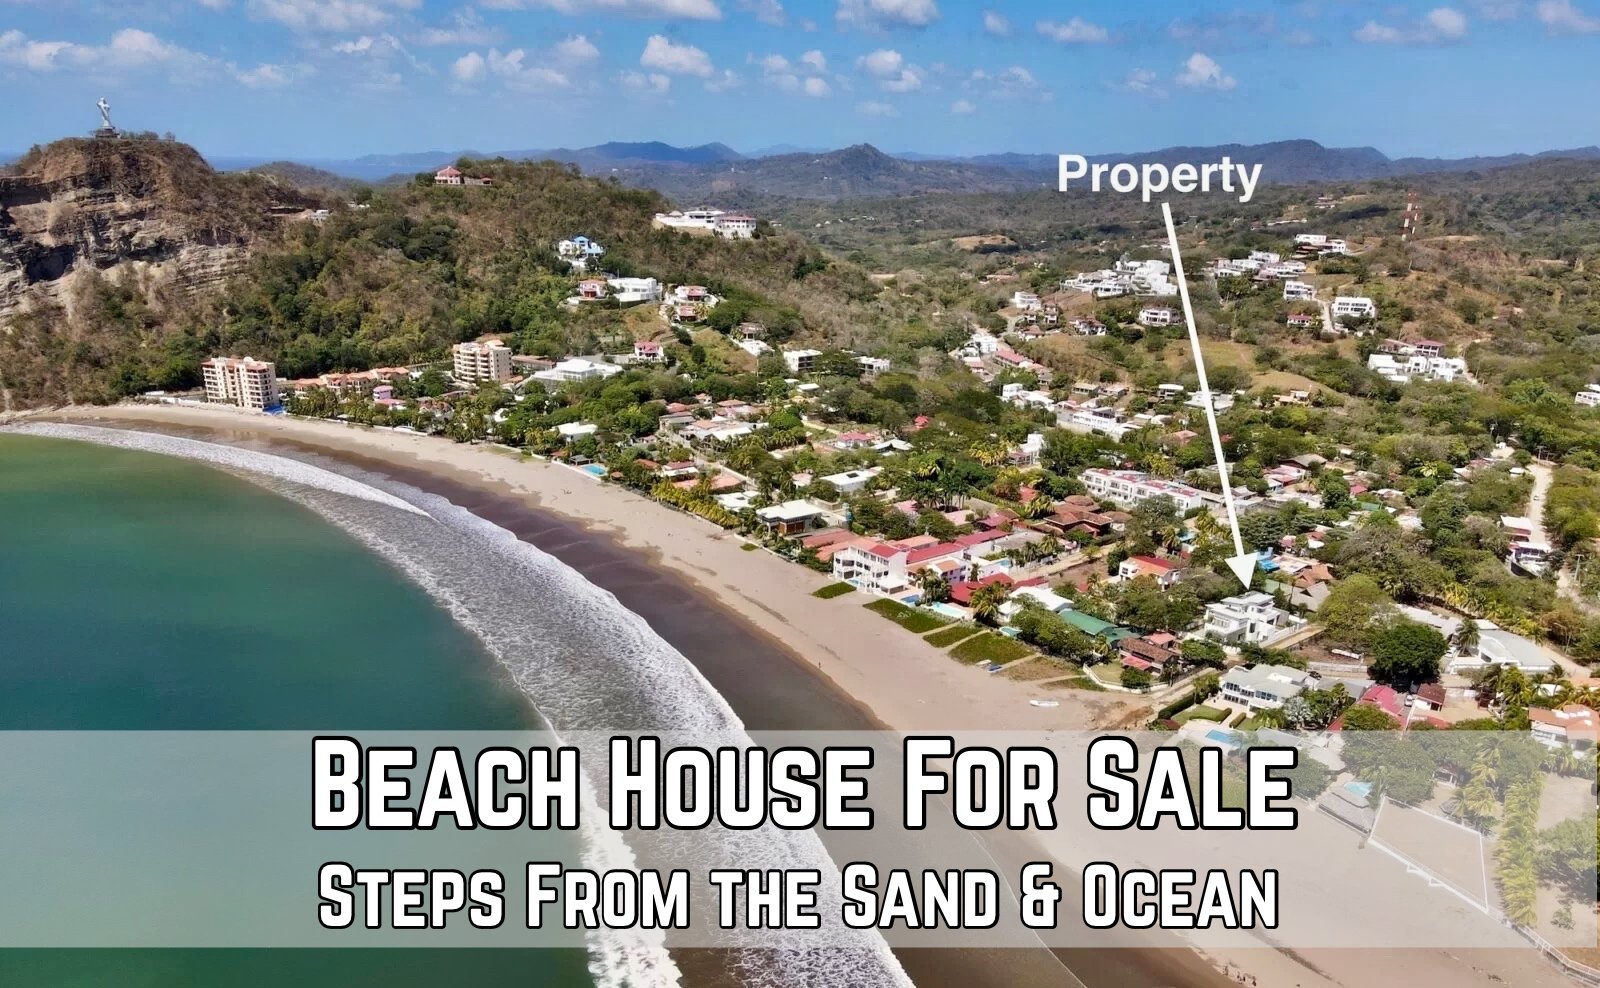 Beach Home House Property For Sale San Juan Del Sur Nicaragua Ocean View Luxury Real Estate P1-2.jpg